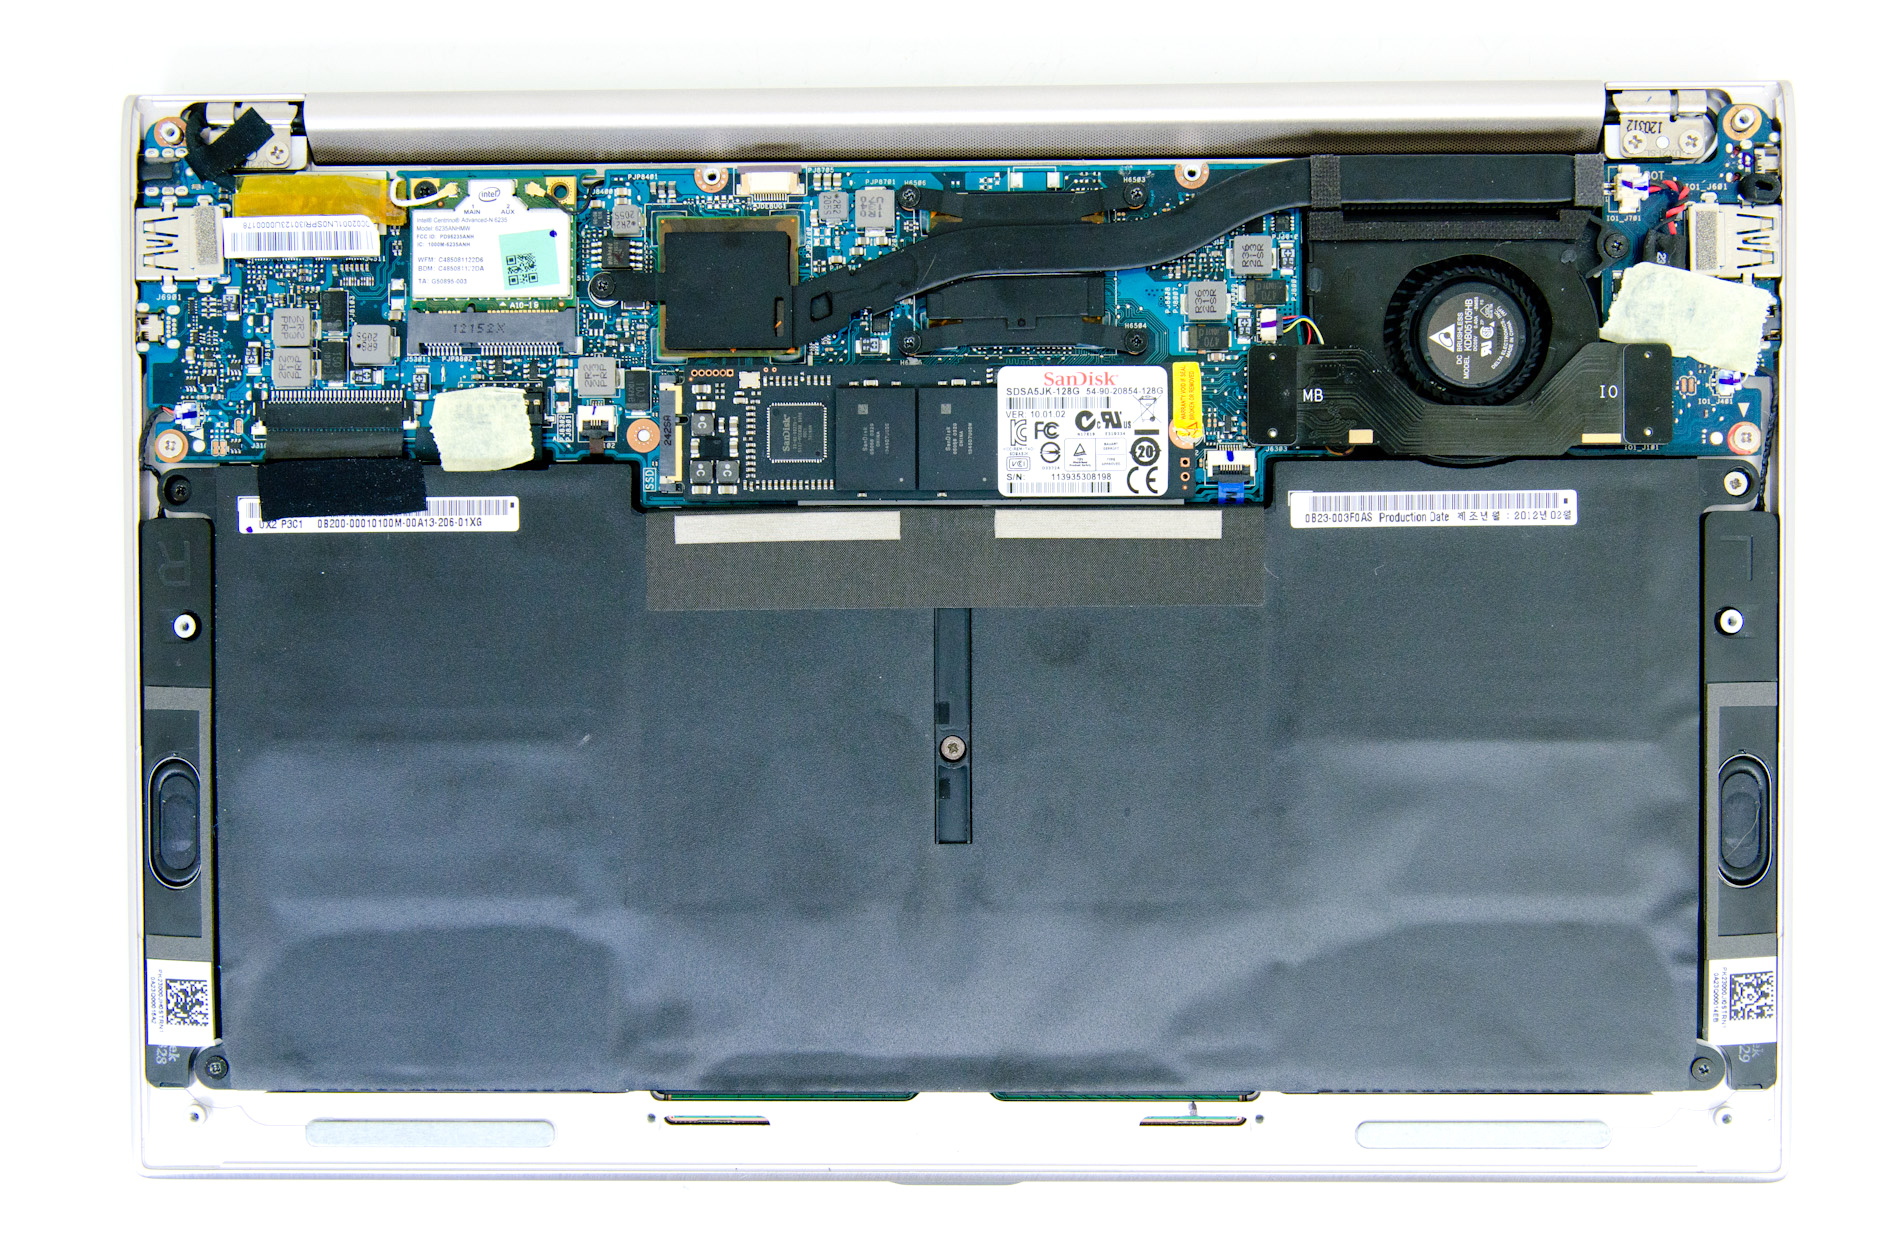 ASUS Zenbook Prime (UX21A) Teardown